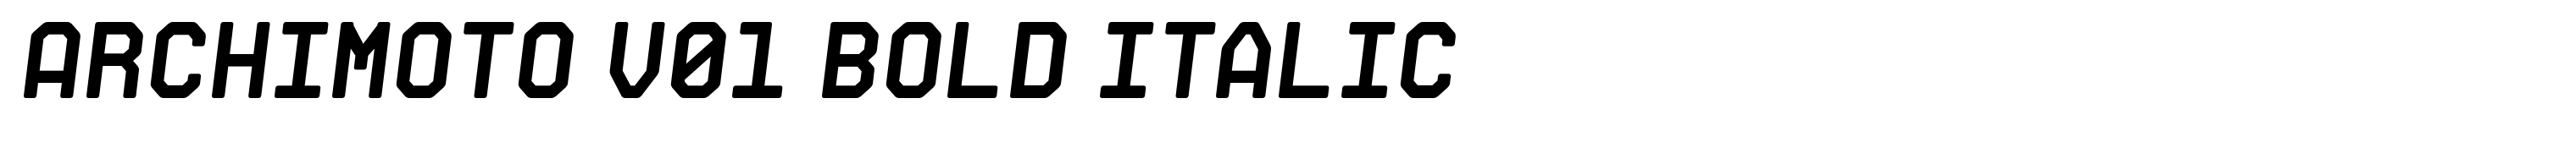 Archimoto V01 Bold Italic